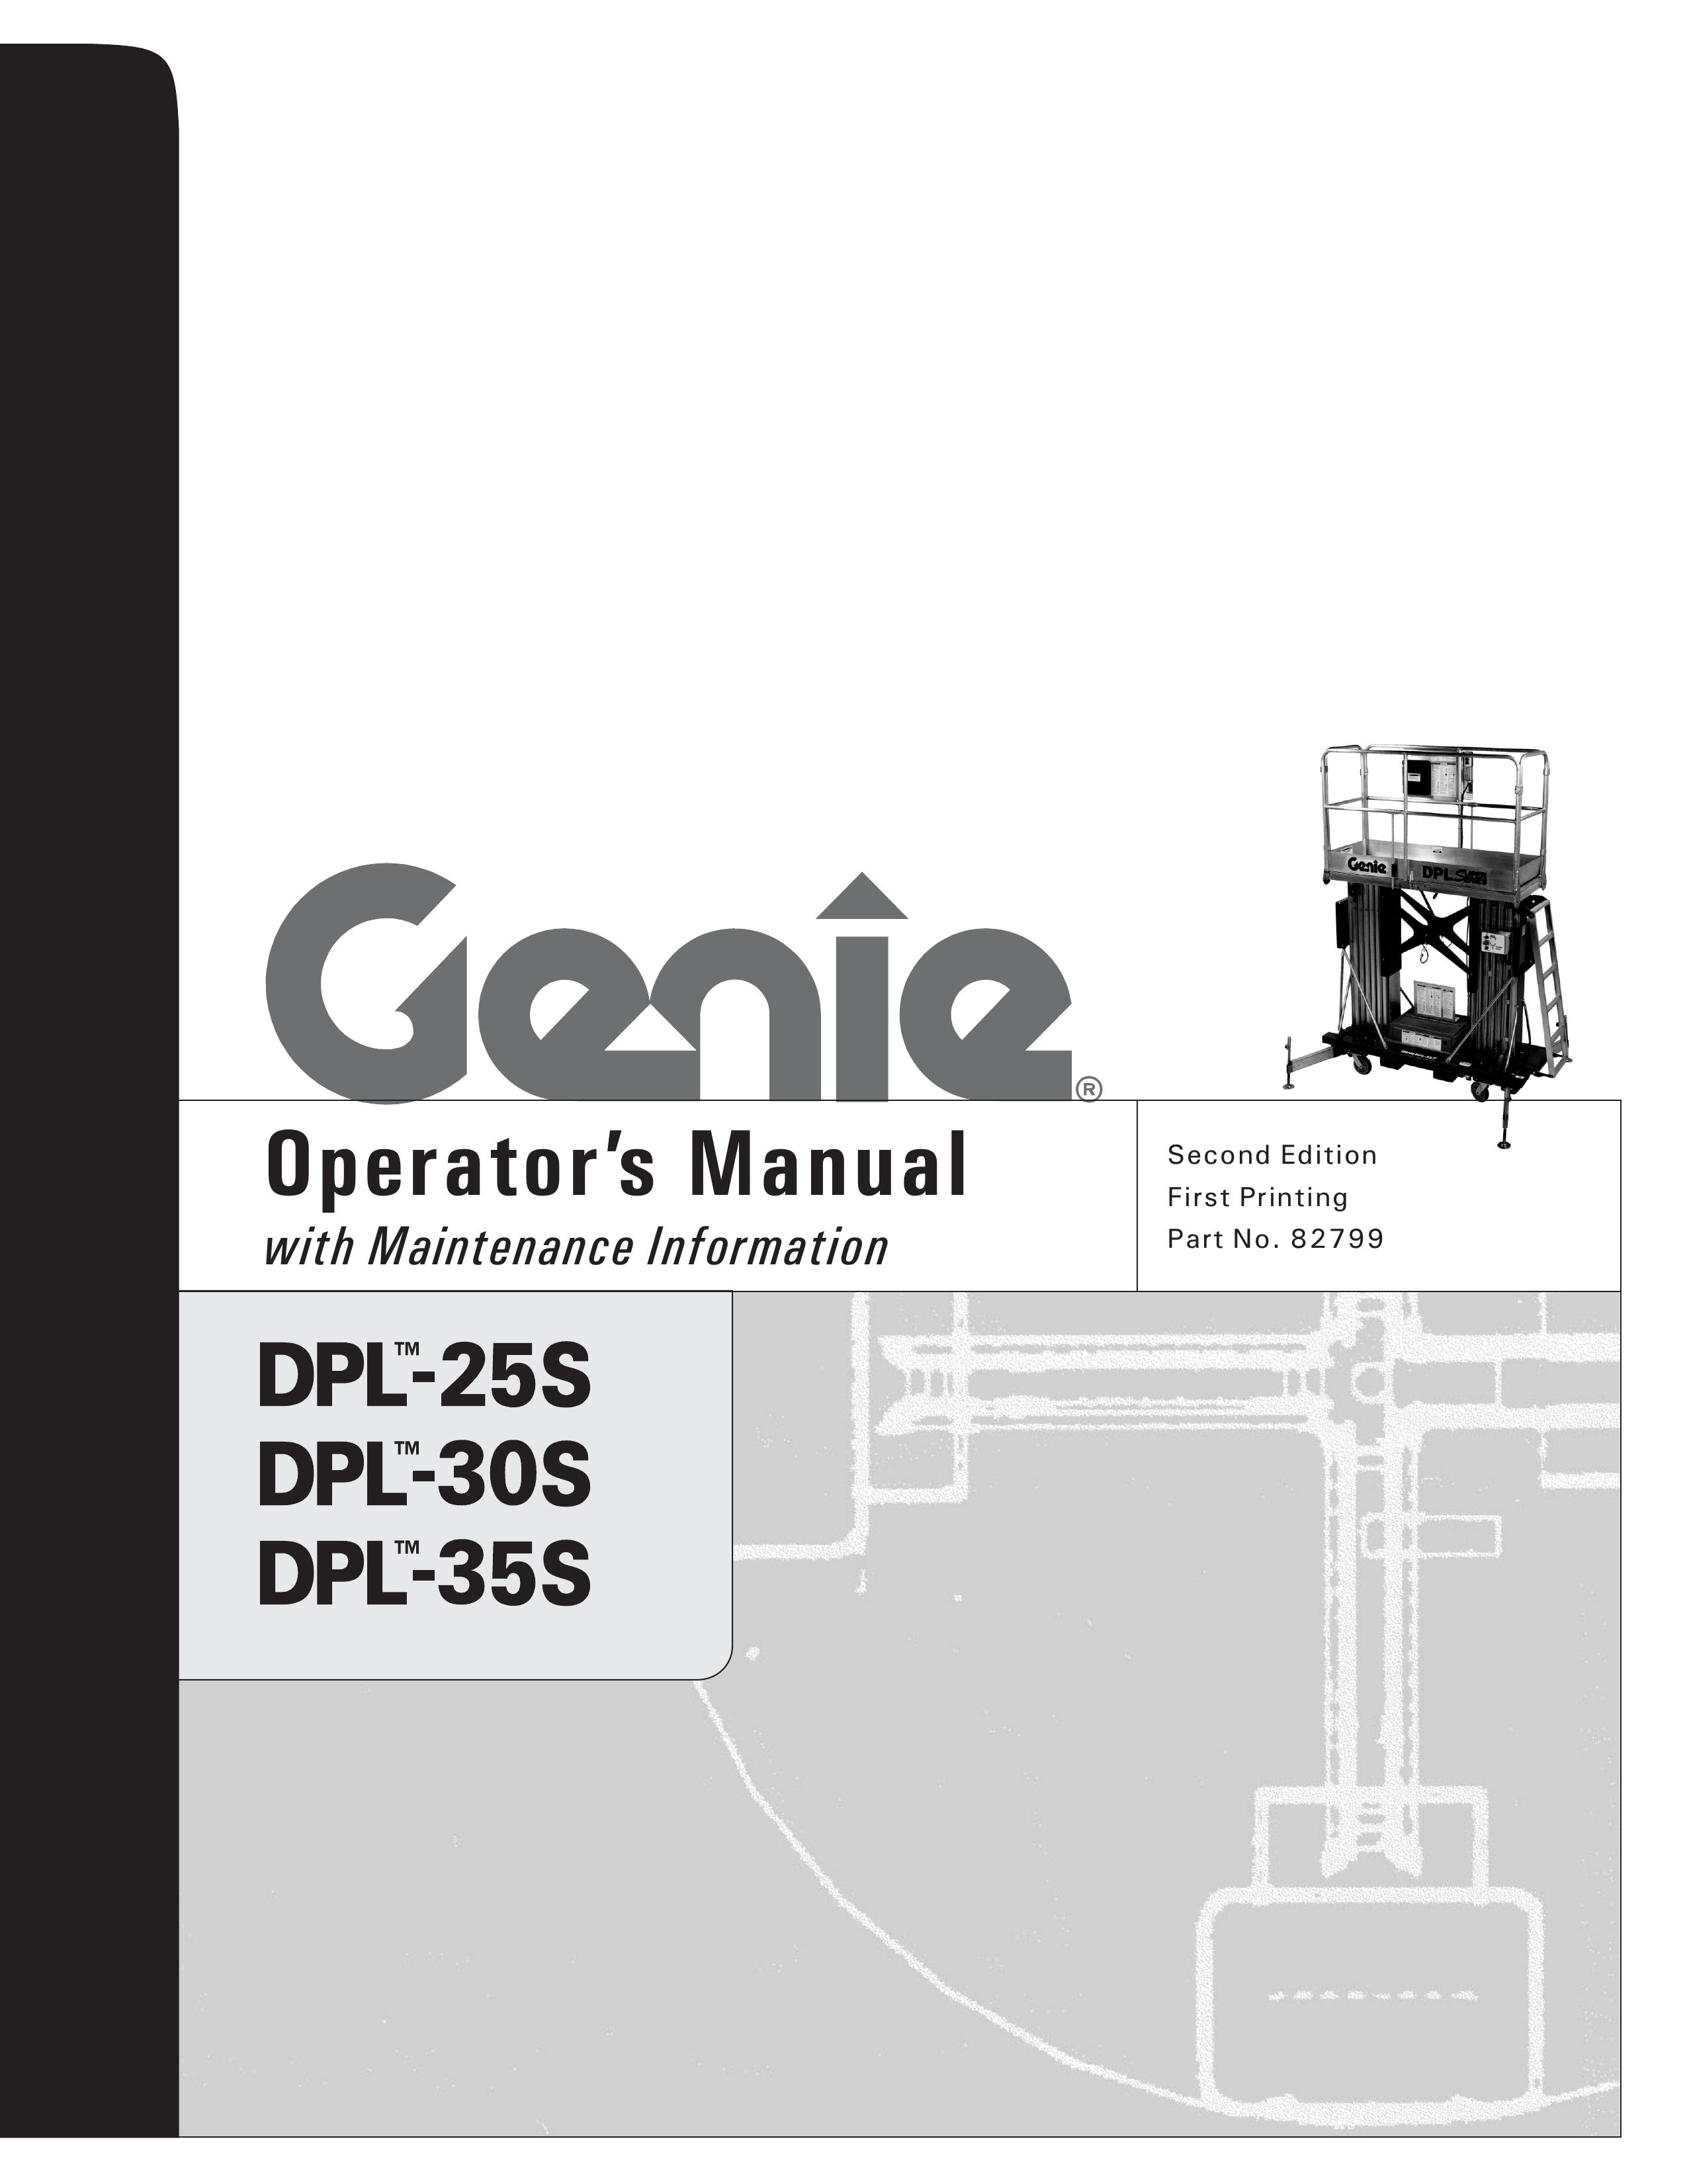 Genie DPL-35S Utility Vehicle User Manual